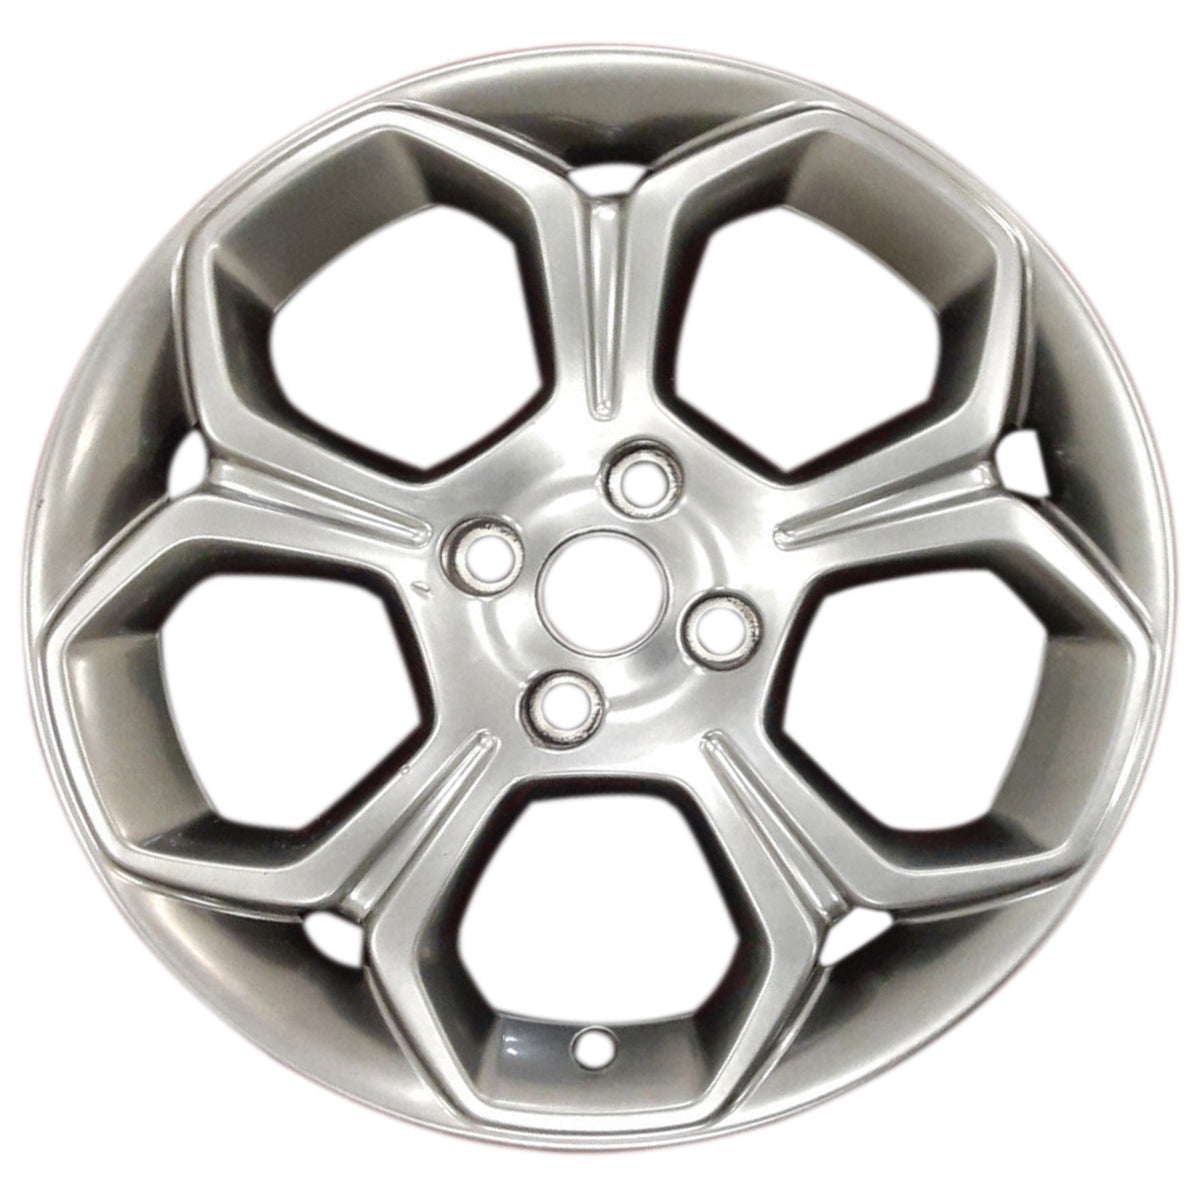 2022 Ford Ecosport 17" OEM Wheel Rim W10151S